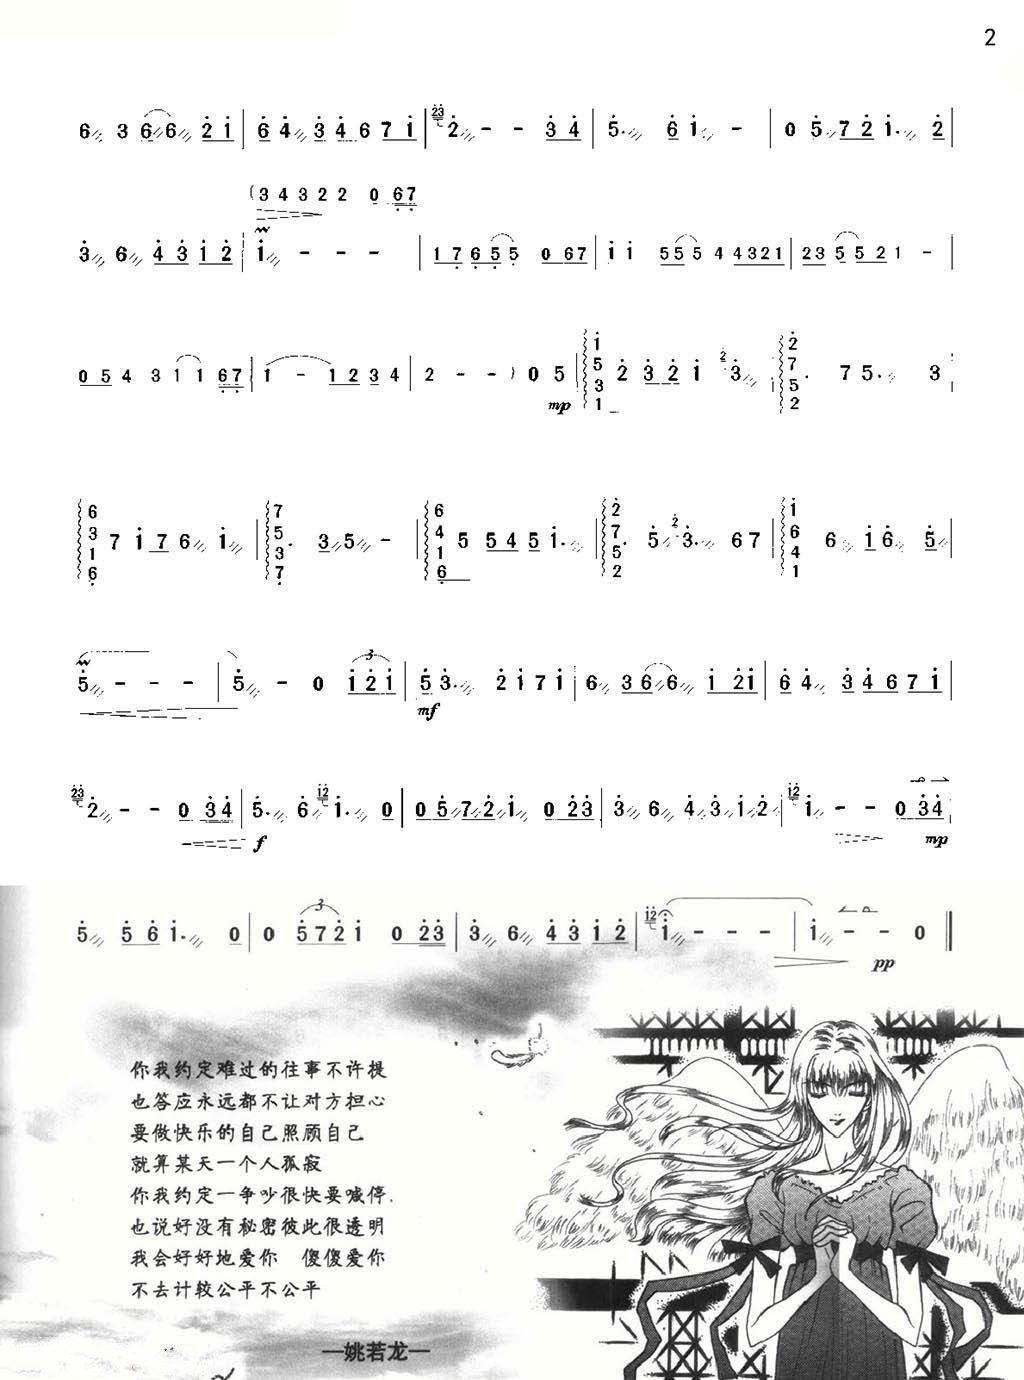 Agreement (Dulcimer)（yangqin sheet music）